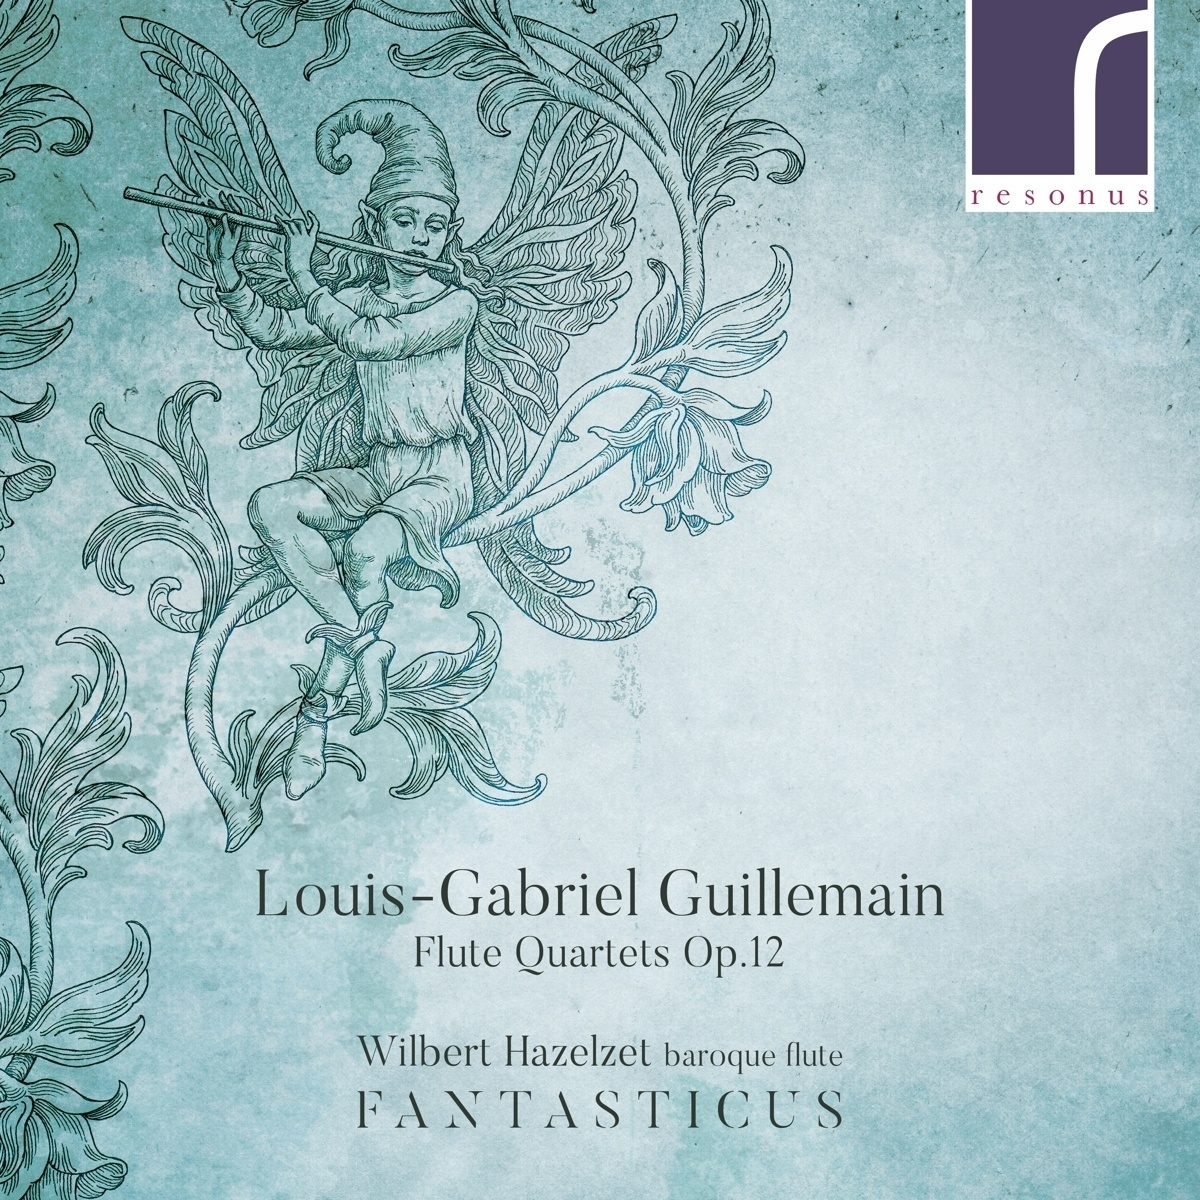 Flötenquartette Op.12 - Wilbert Hazelzet  Fantasticus. (CD)